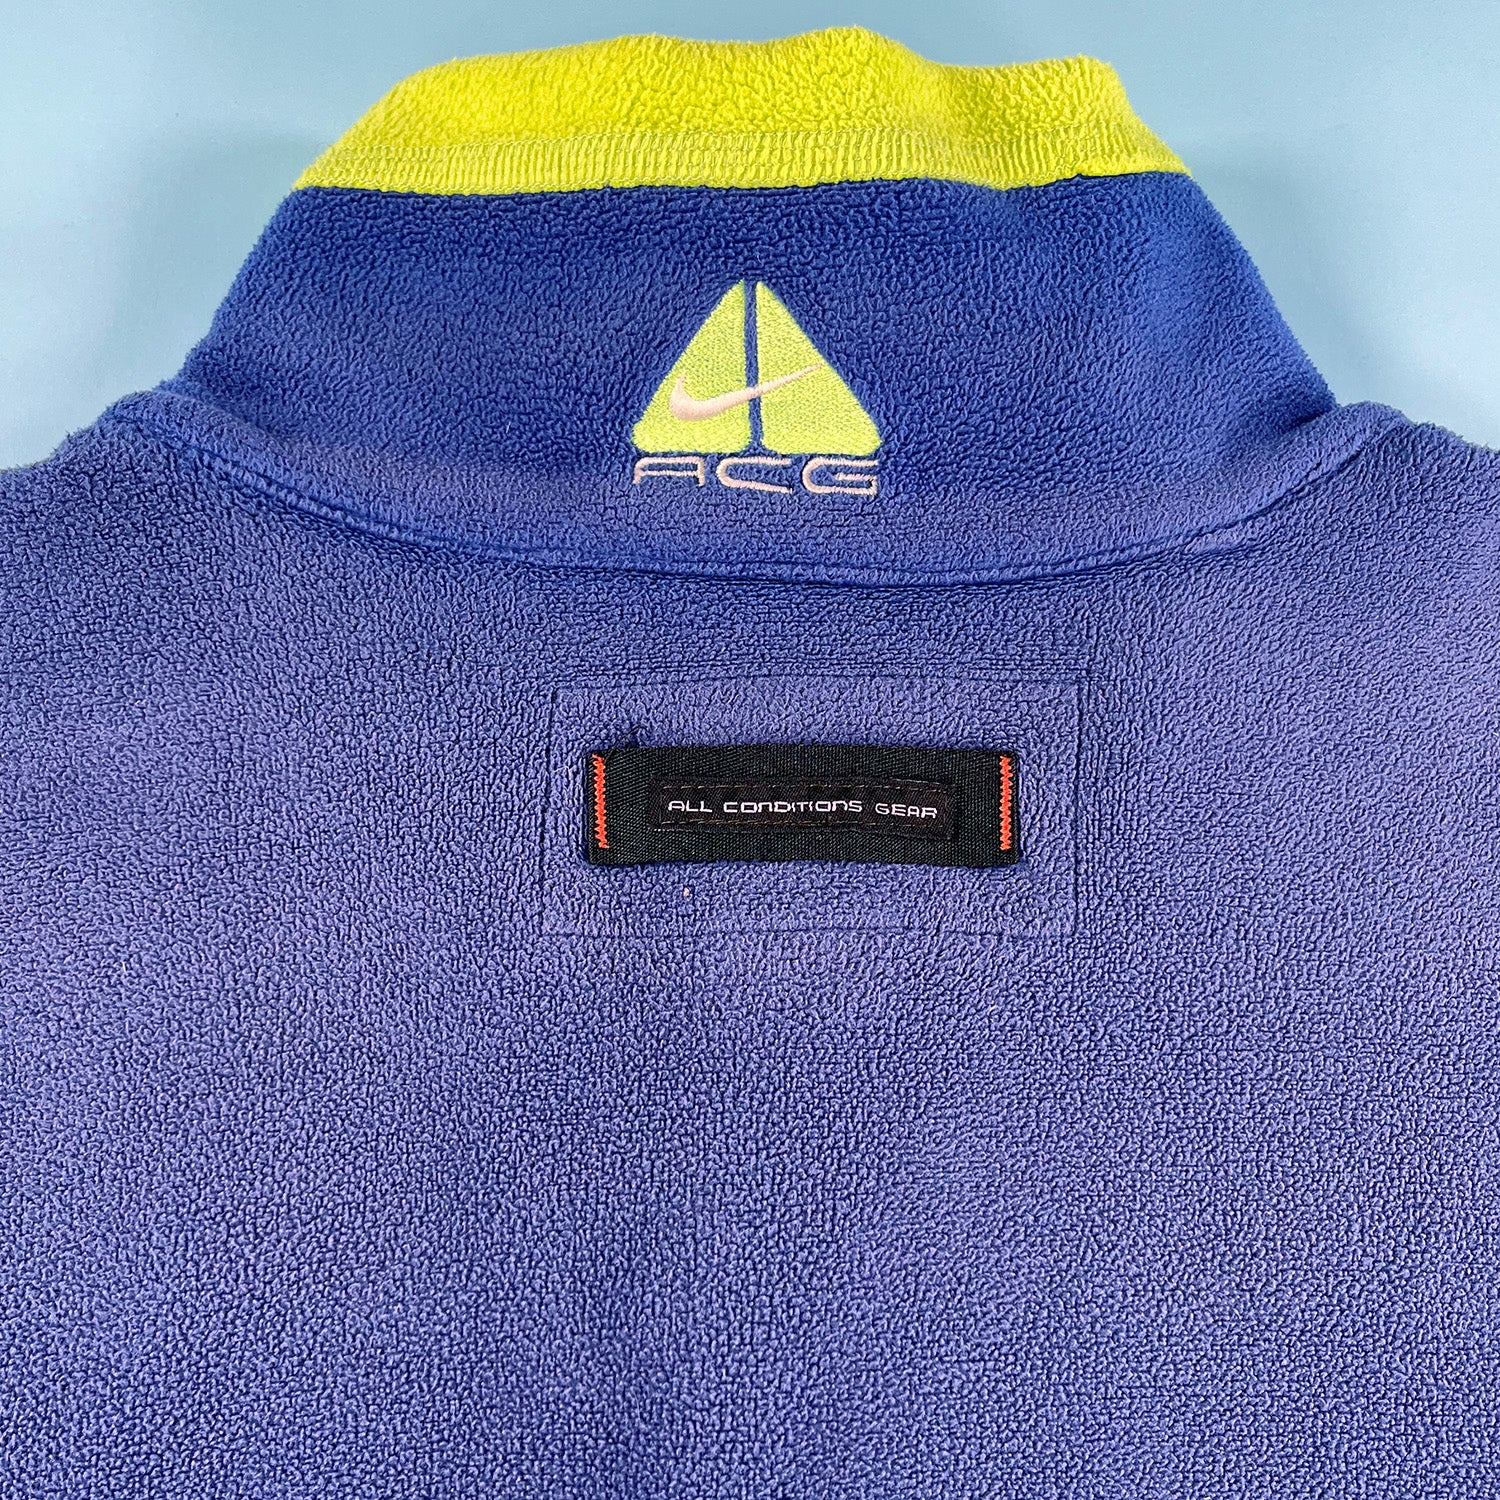 90s Nike ACG fleece vest XL – Gone Again Vintage